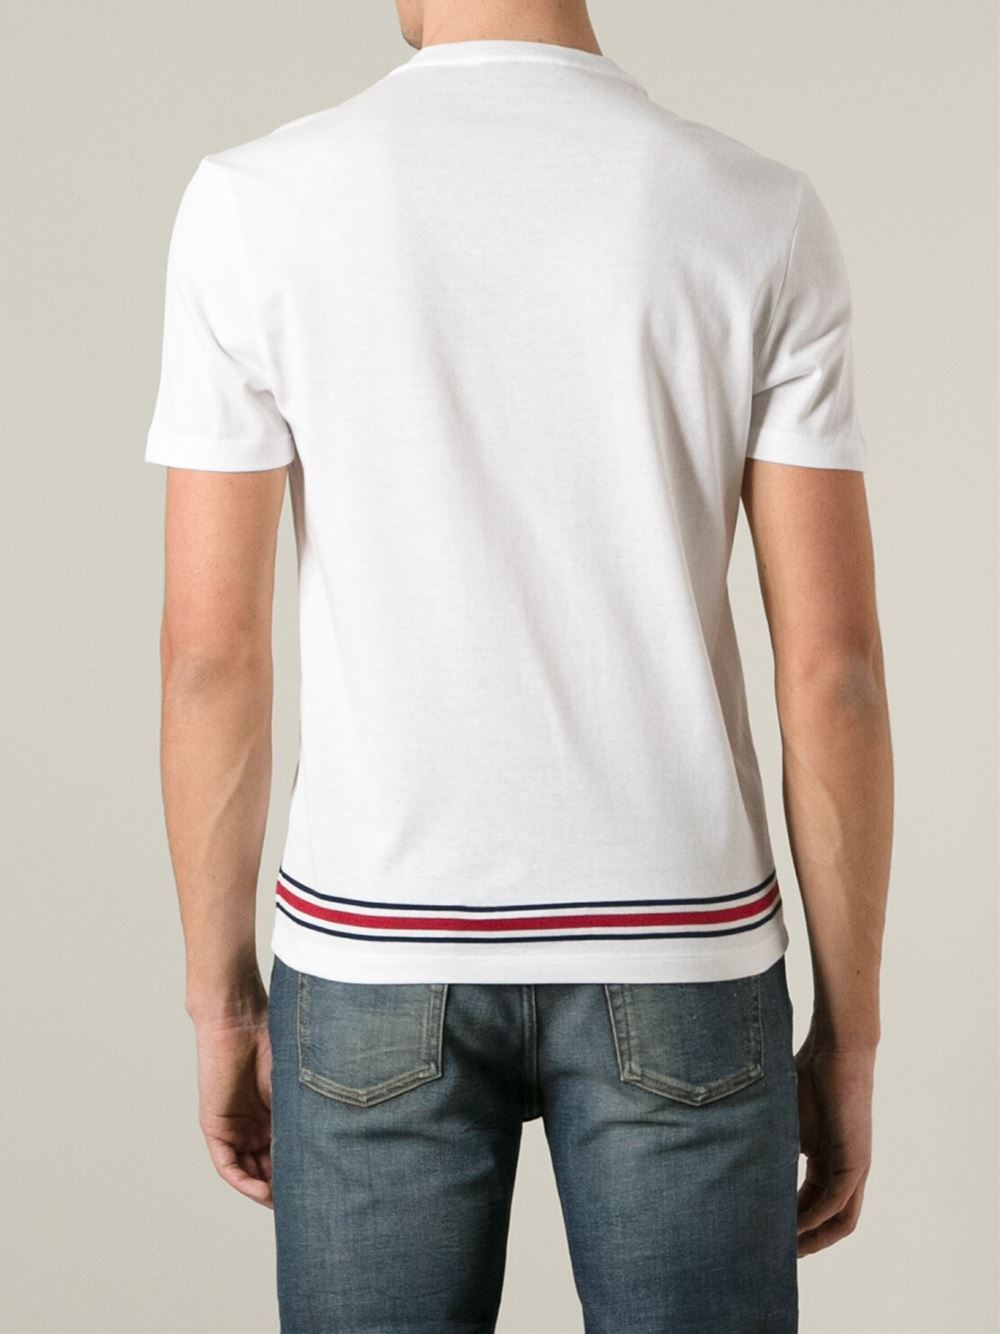 Gucci V-Neck T-Shirt in White for Men - Lyst